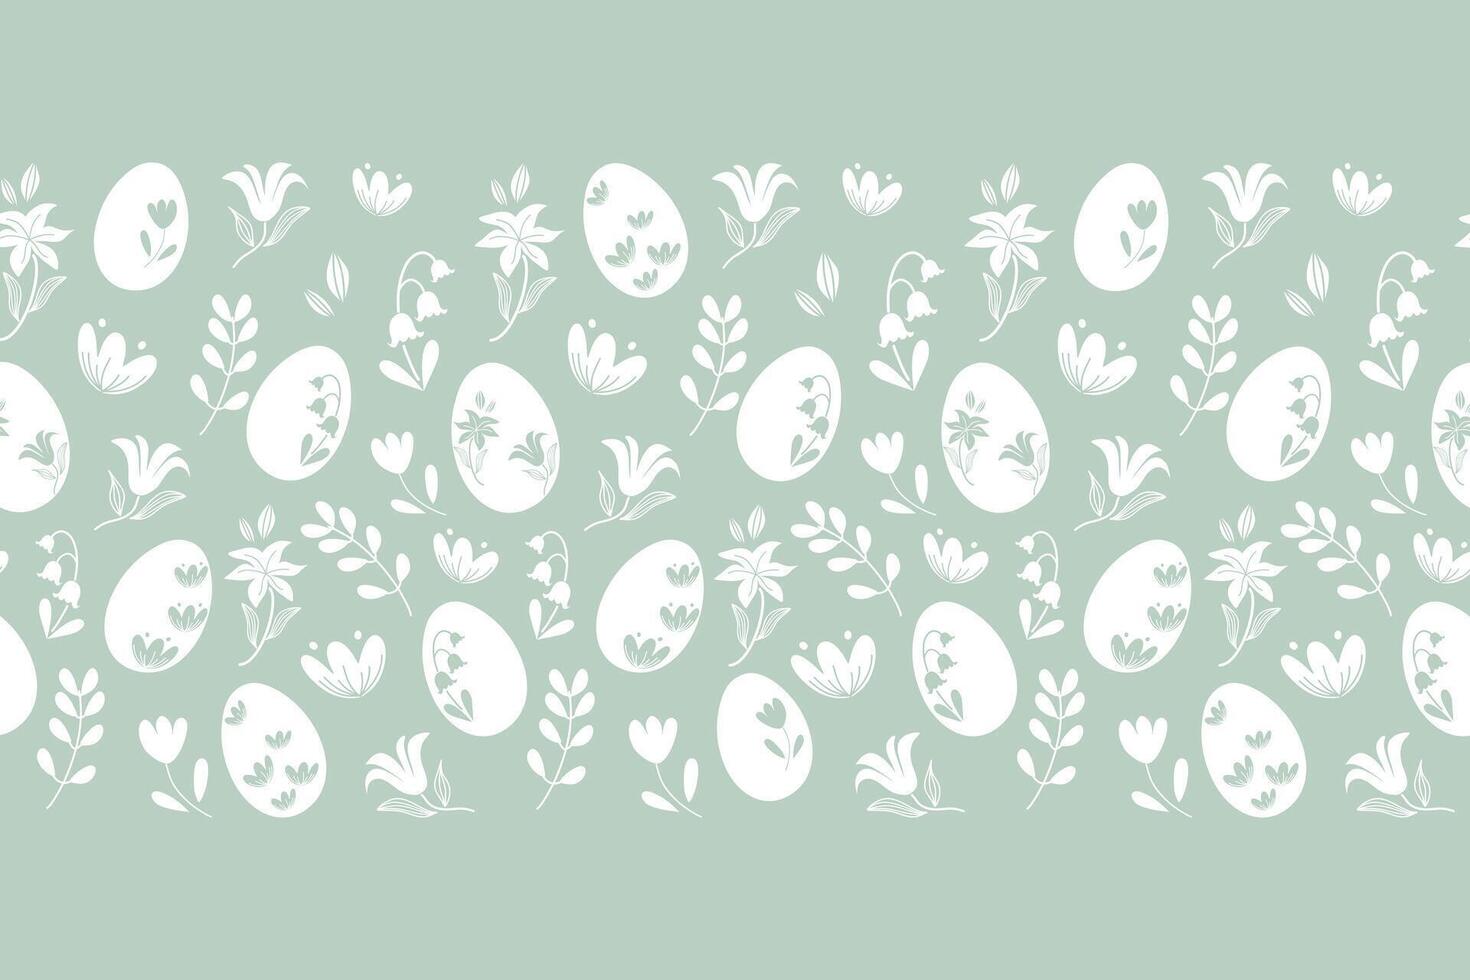 Pascua de Resurrección huevos antecedentes modelo sin costura vector ilustración